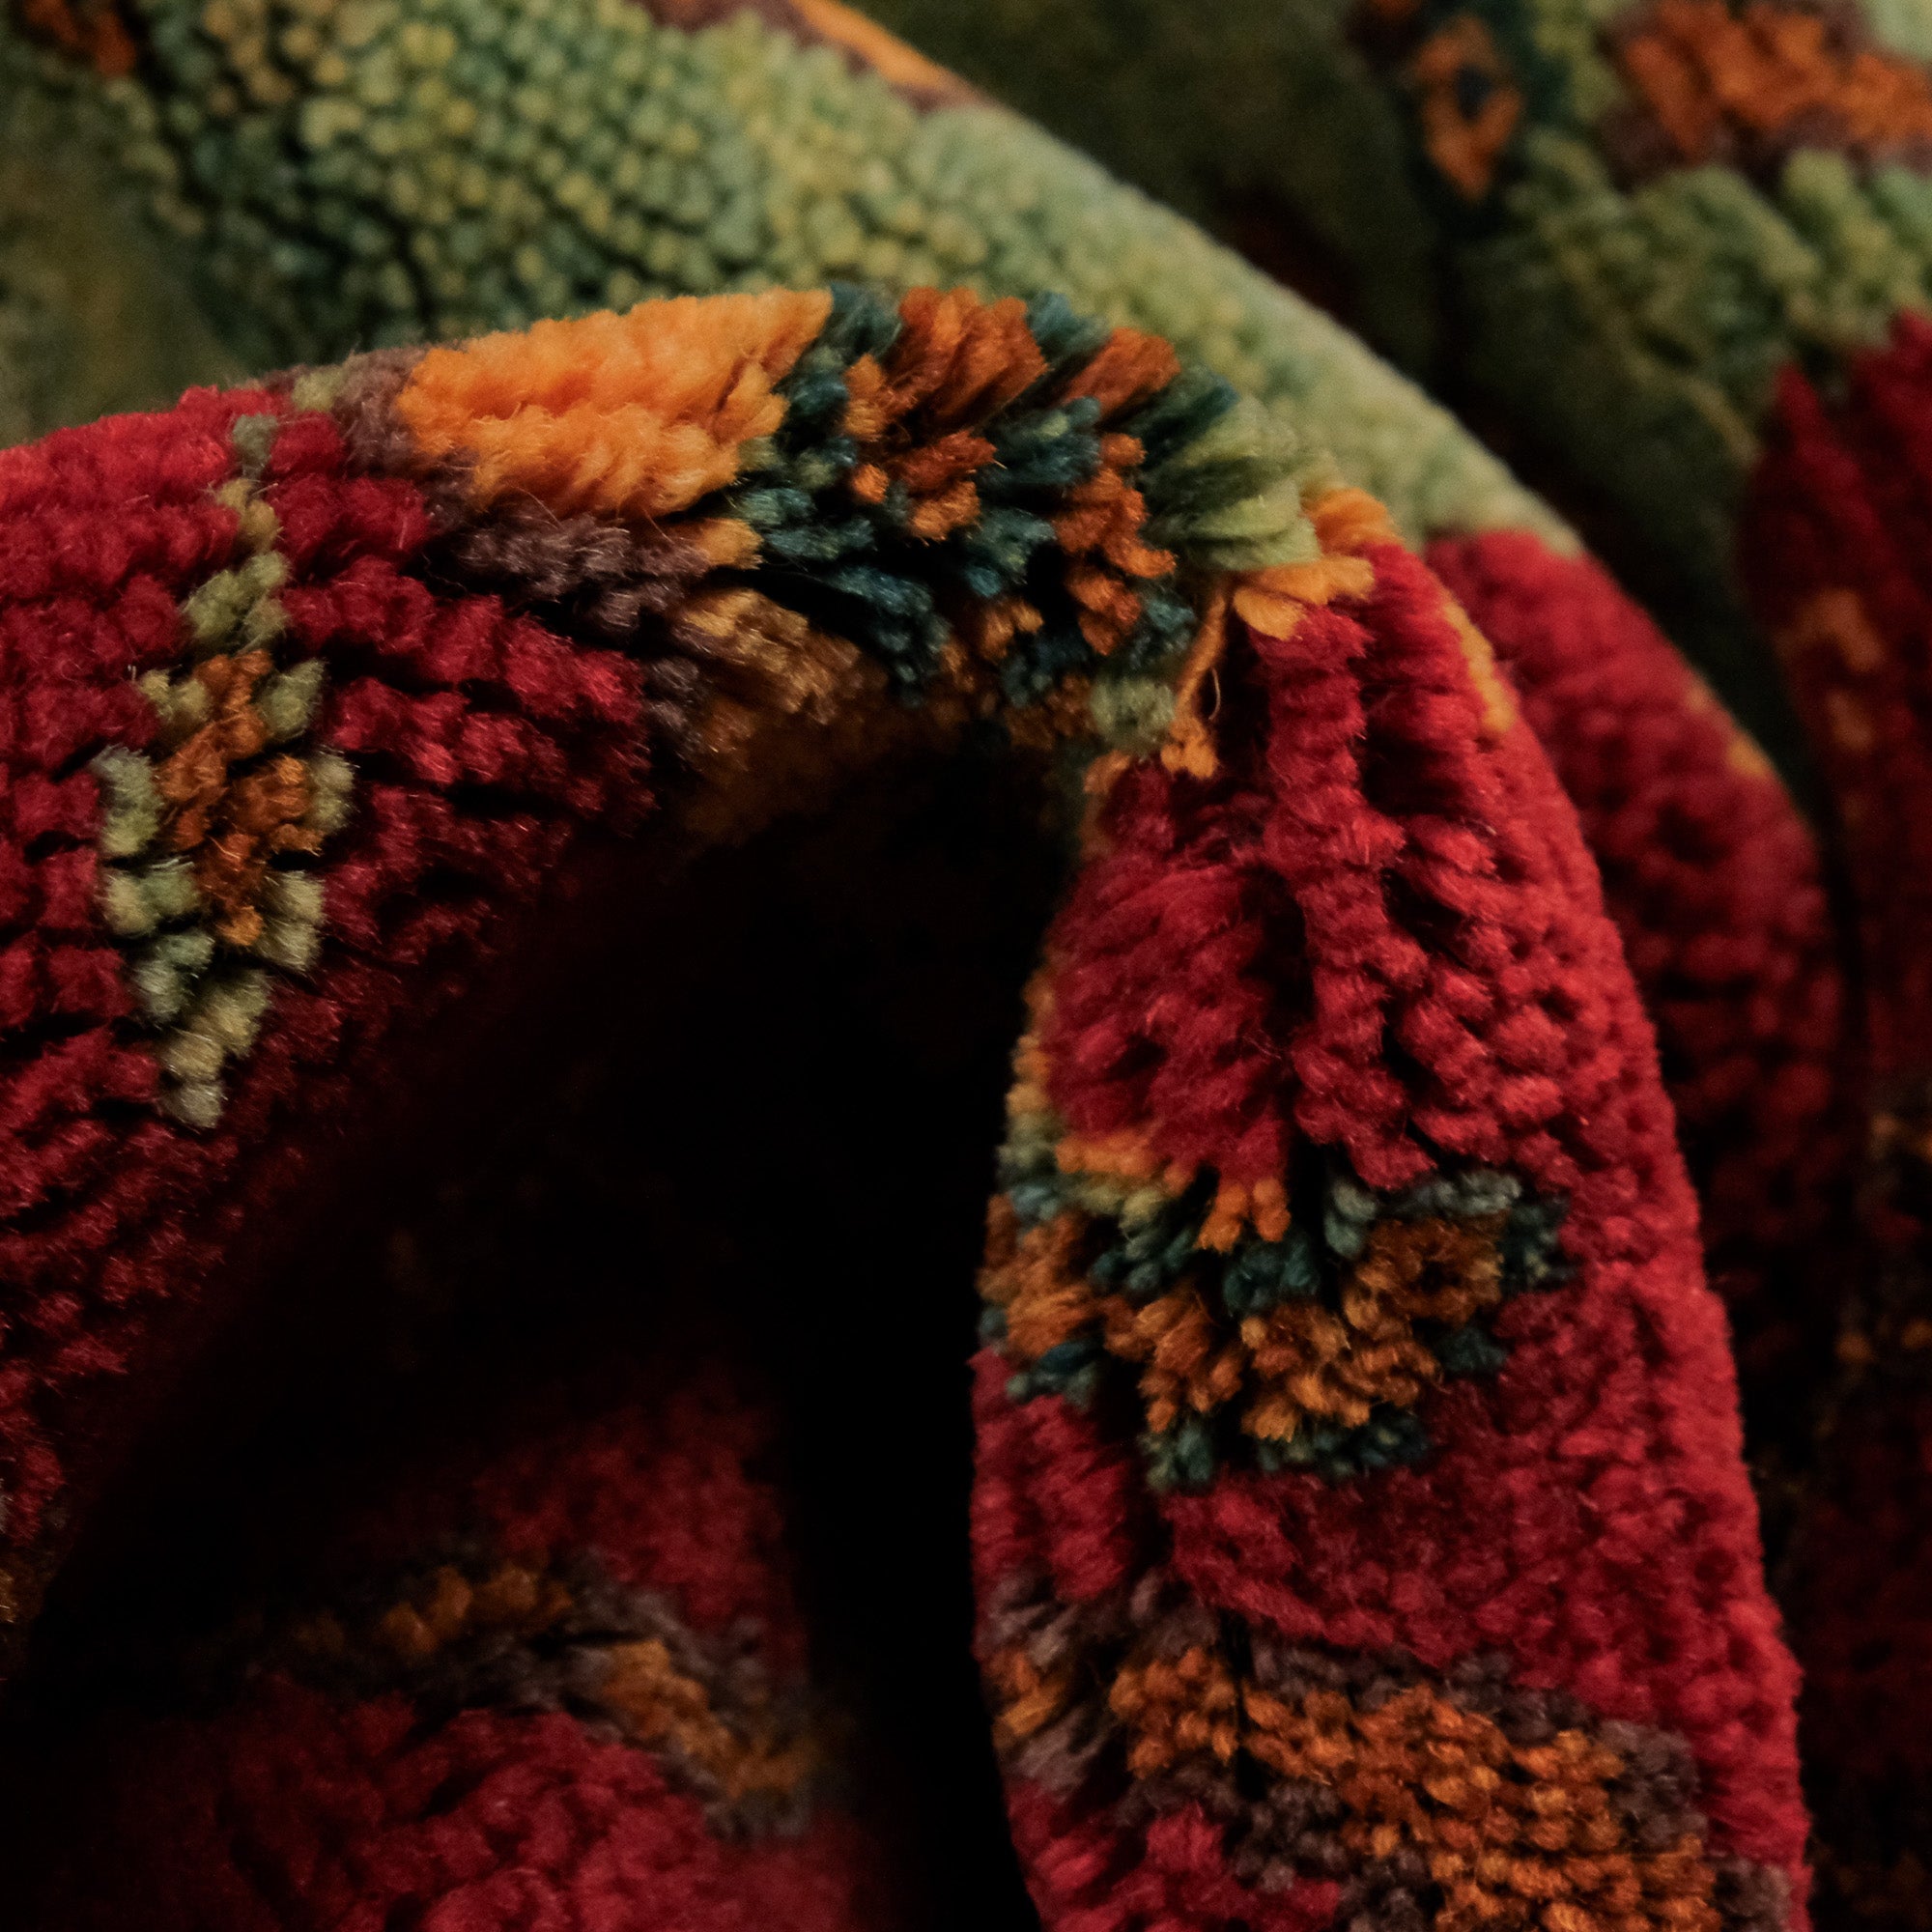 Anatolian Shawl Series Patchwork Patterned Hand-Woven Wool Carpet